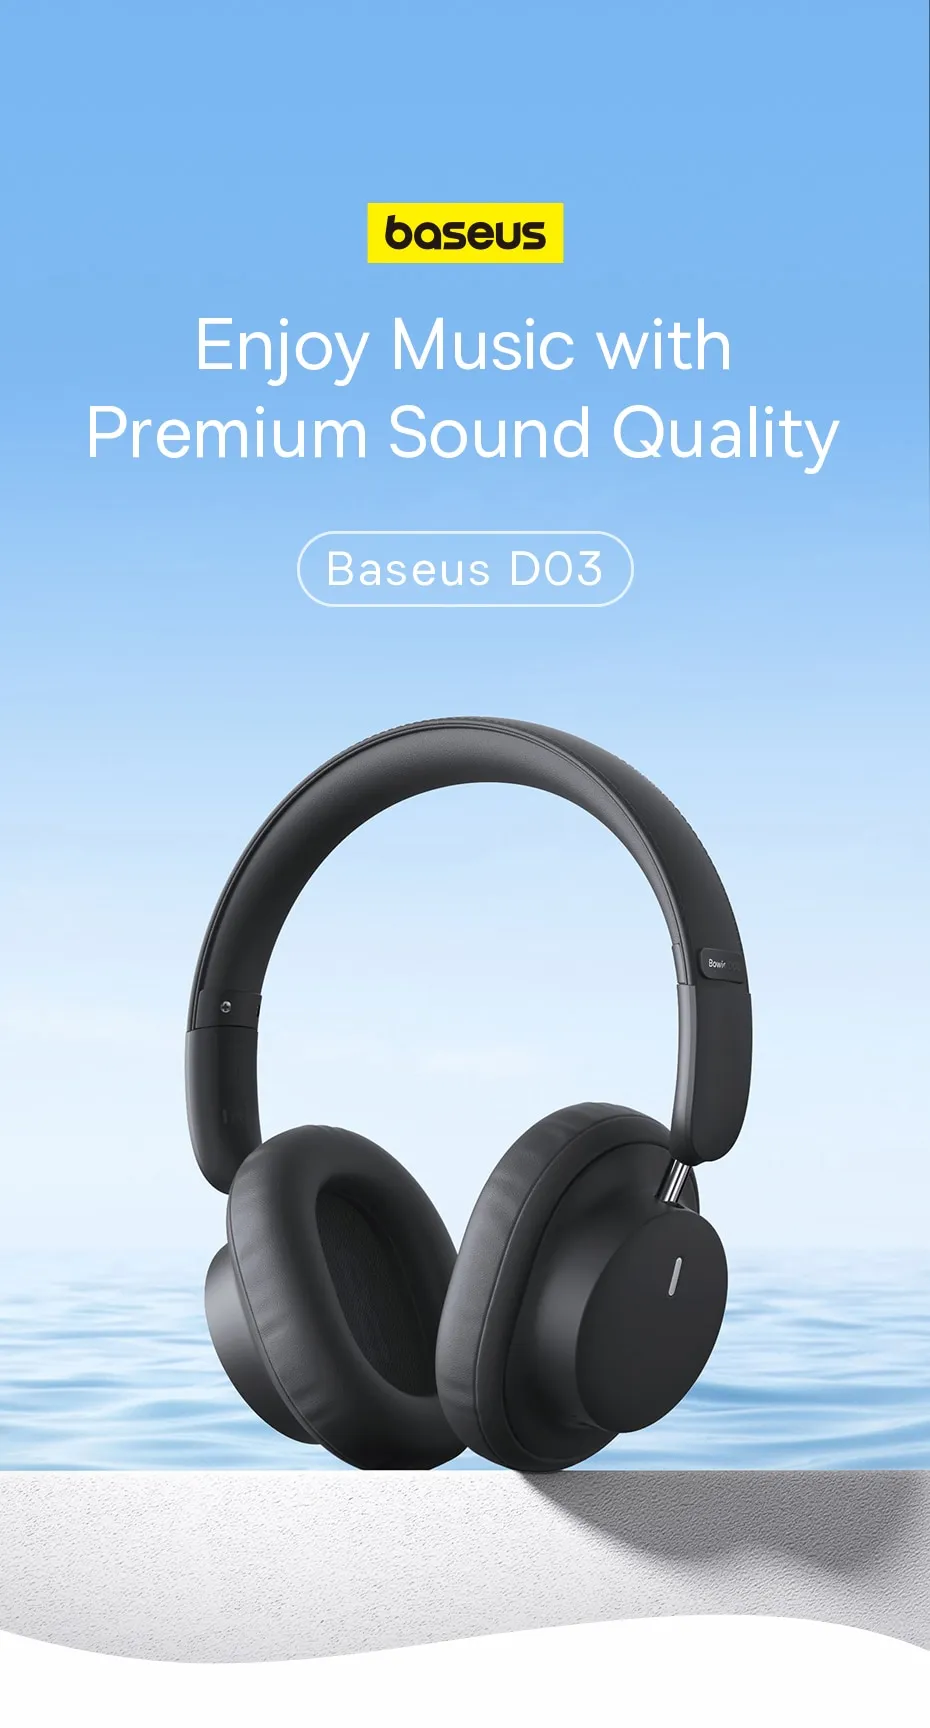 Baseus Bowie D03 Wireless Over Ear Headphones